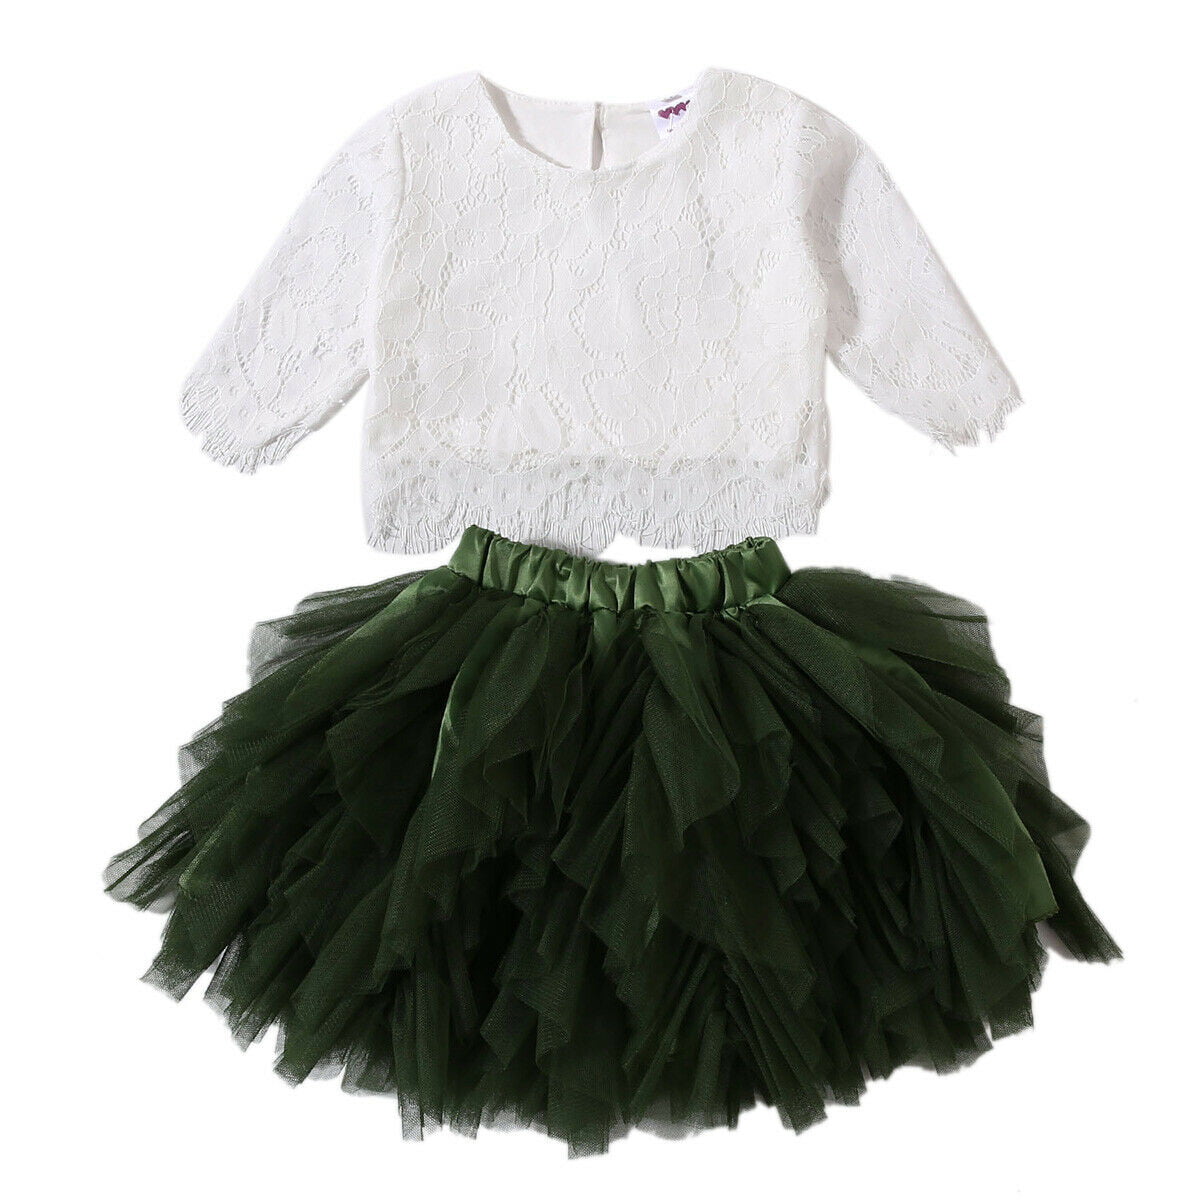 Children Girls 2PCs Dress Outfits Solid T-Shirt Top Dot Printed Tutu Skirts Sets